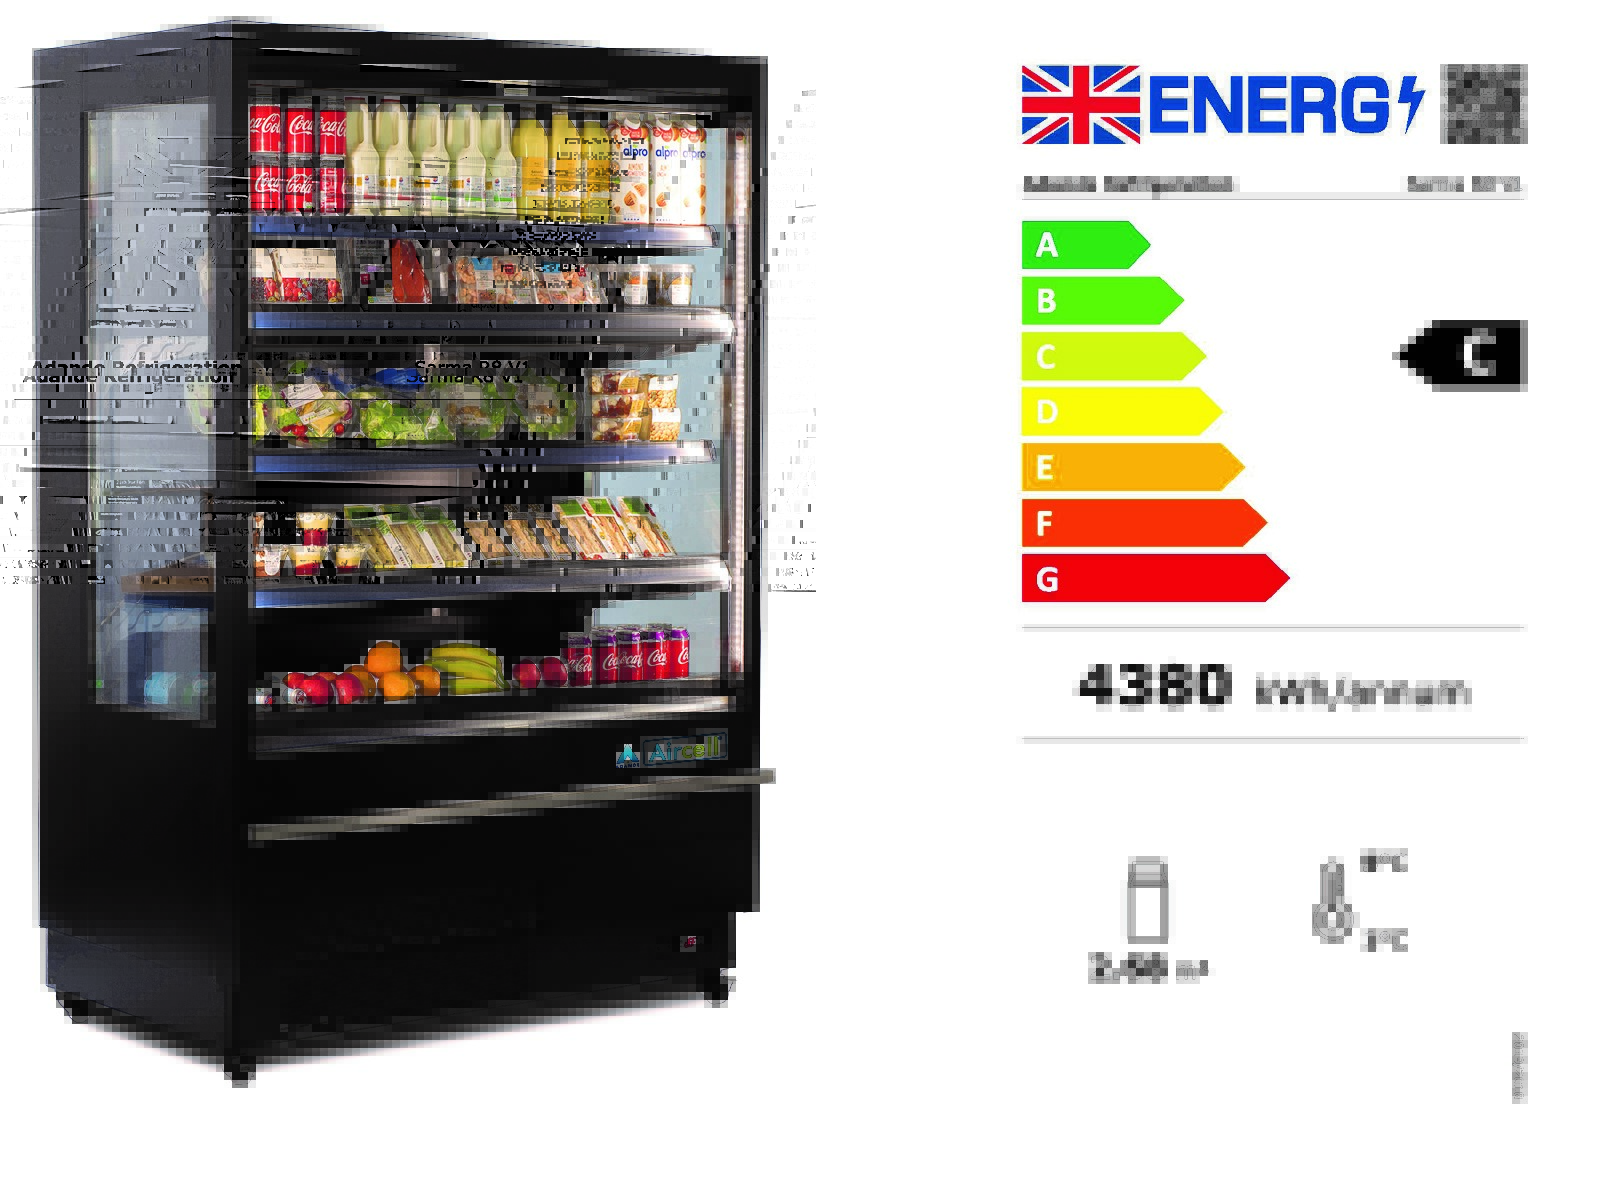 Sarma Cabinet & Energy Label2 June21